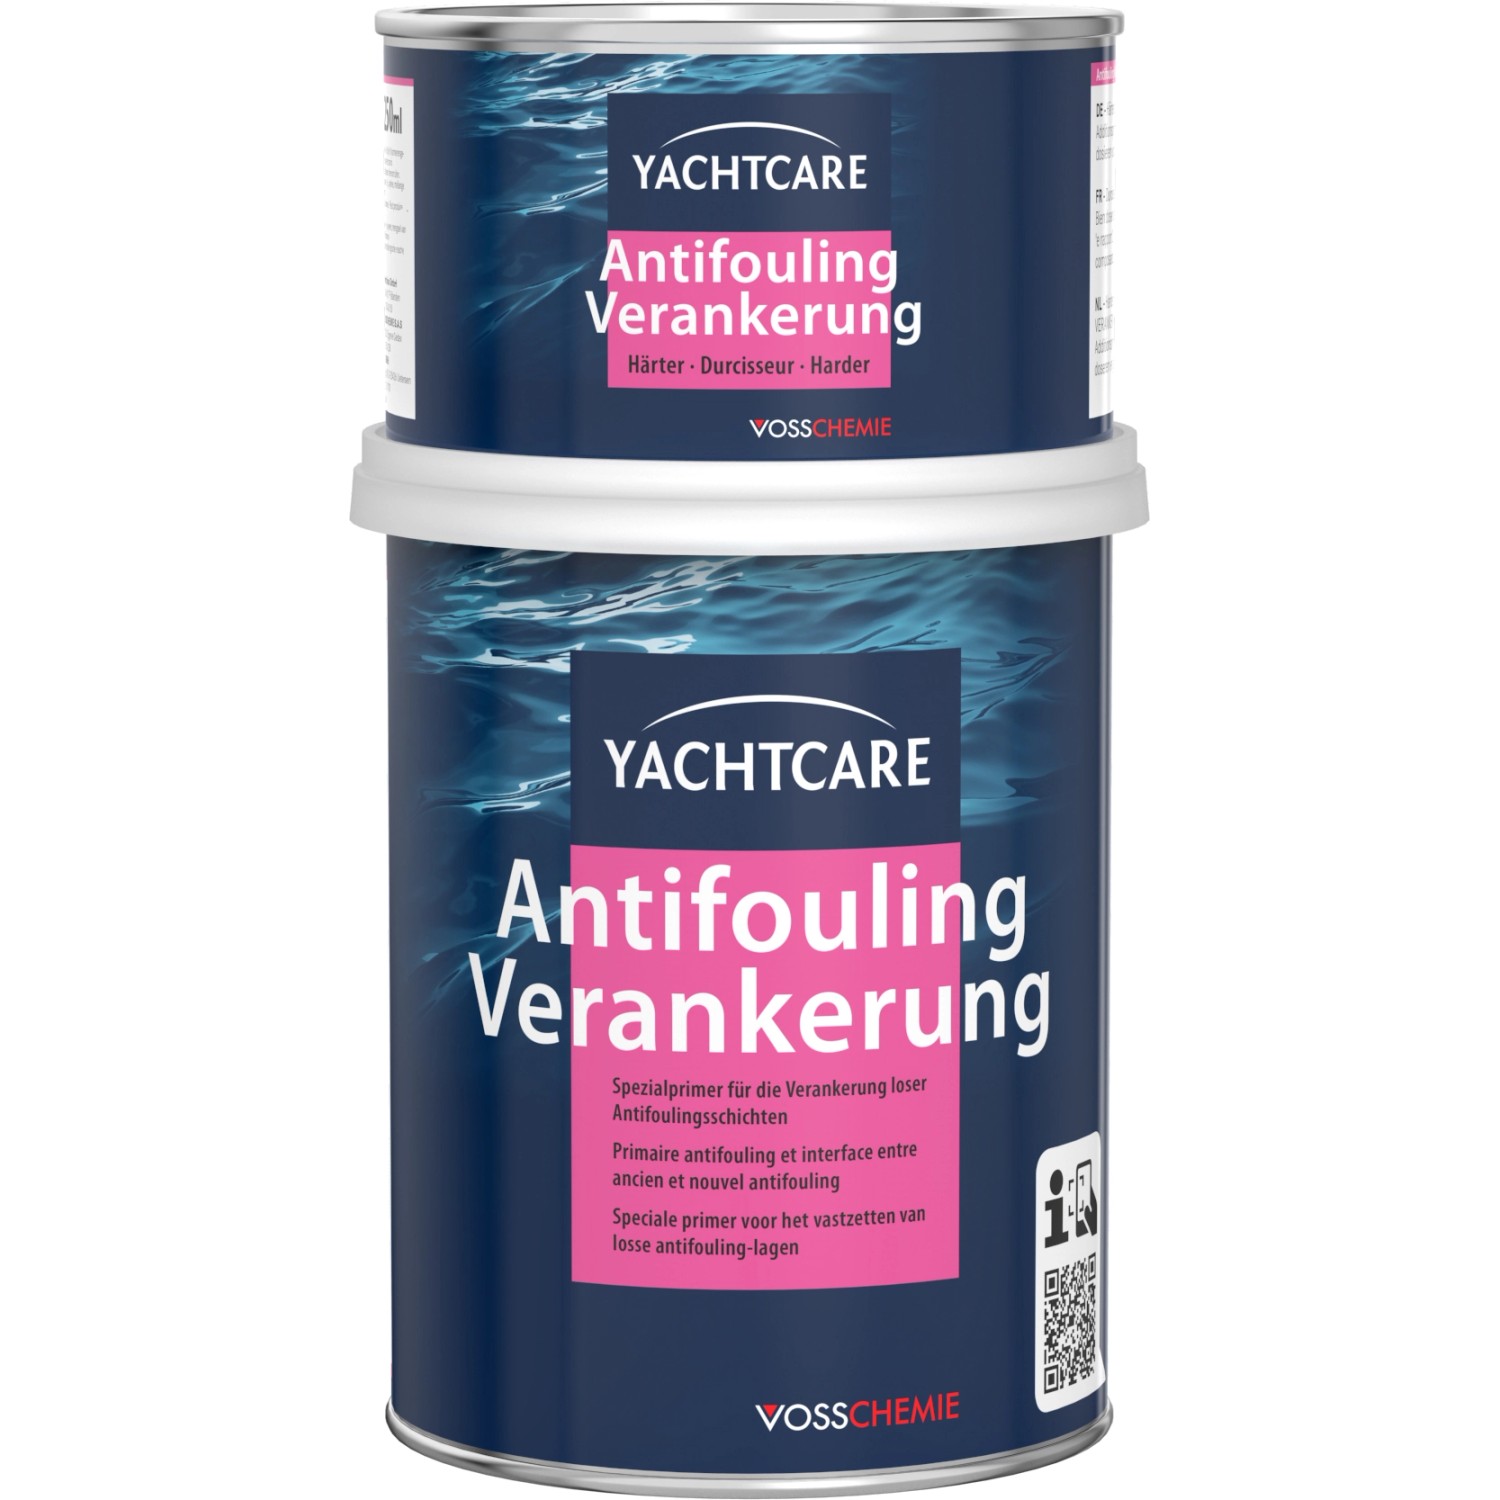 Yachtcare Antifouling Verankerung 750 ml